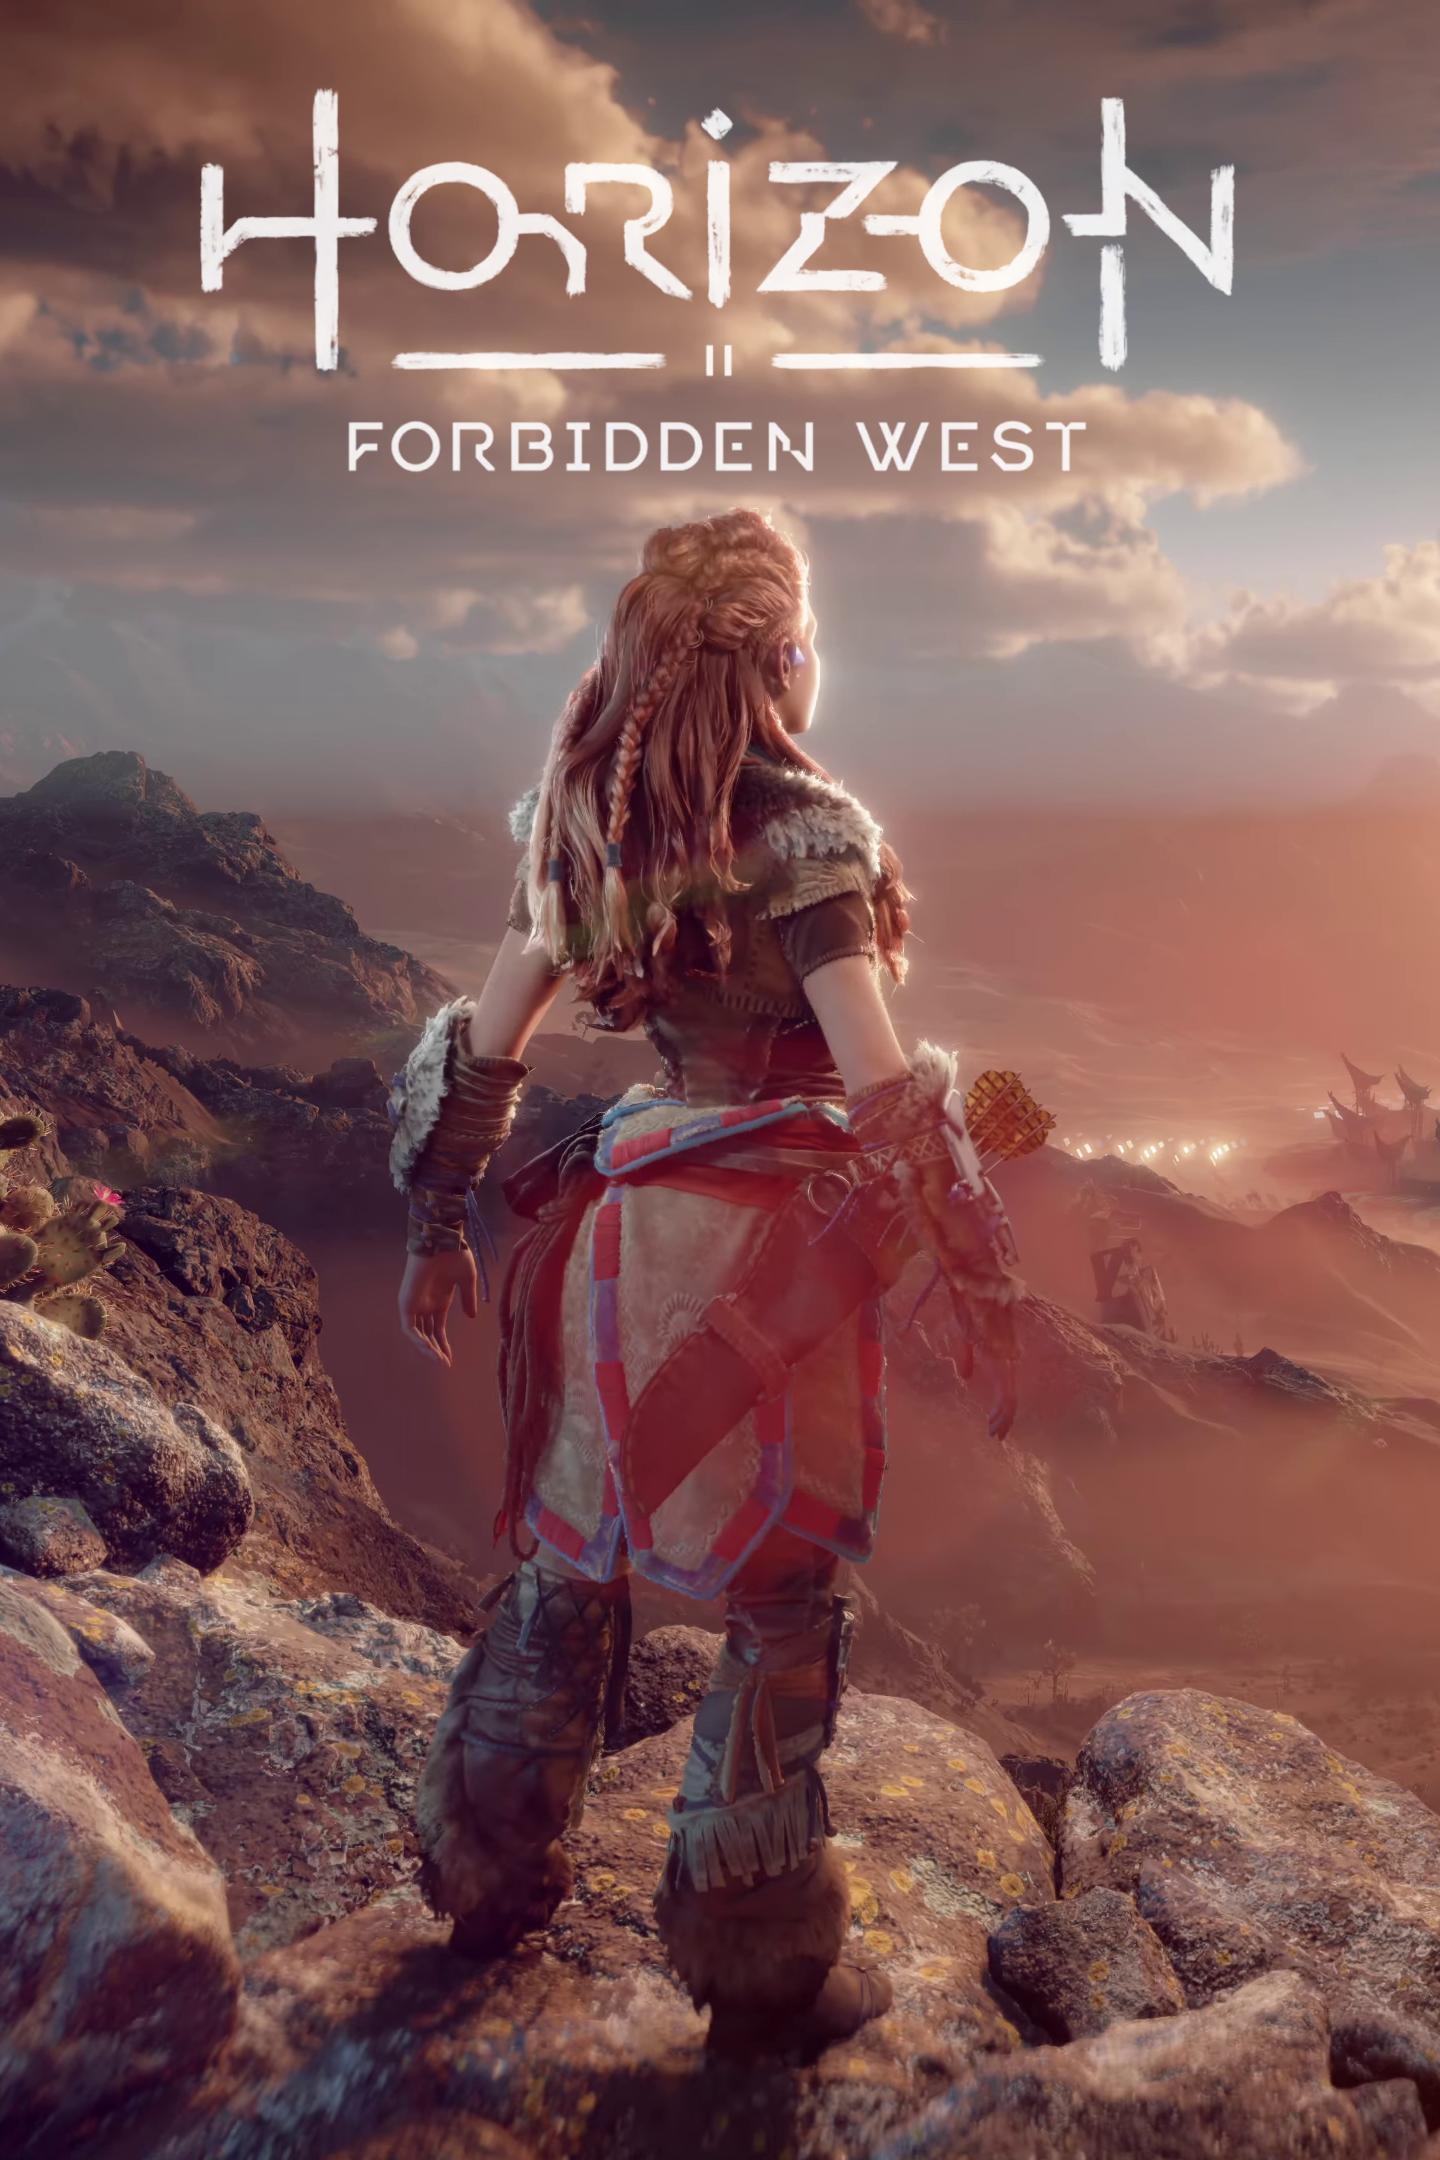 Horizon ll: Forbidden West - Aloy by MunkiePlays